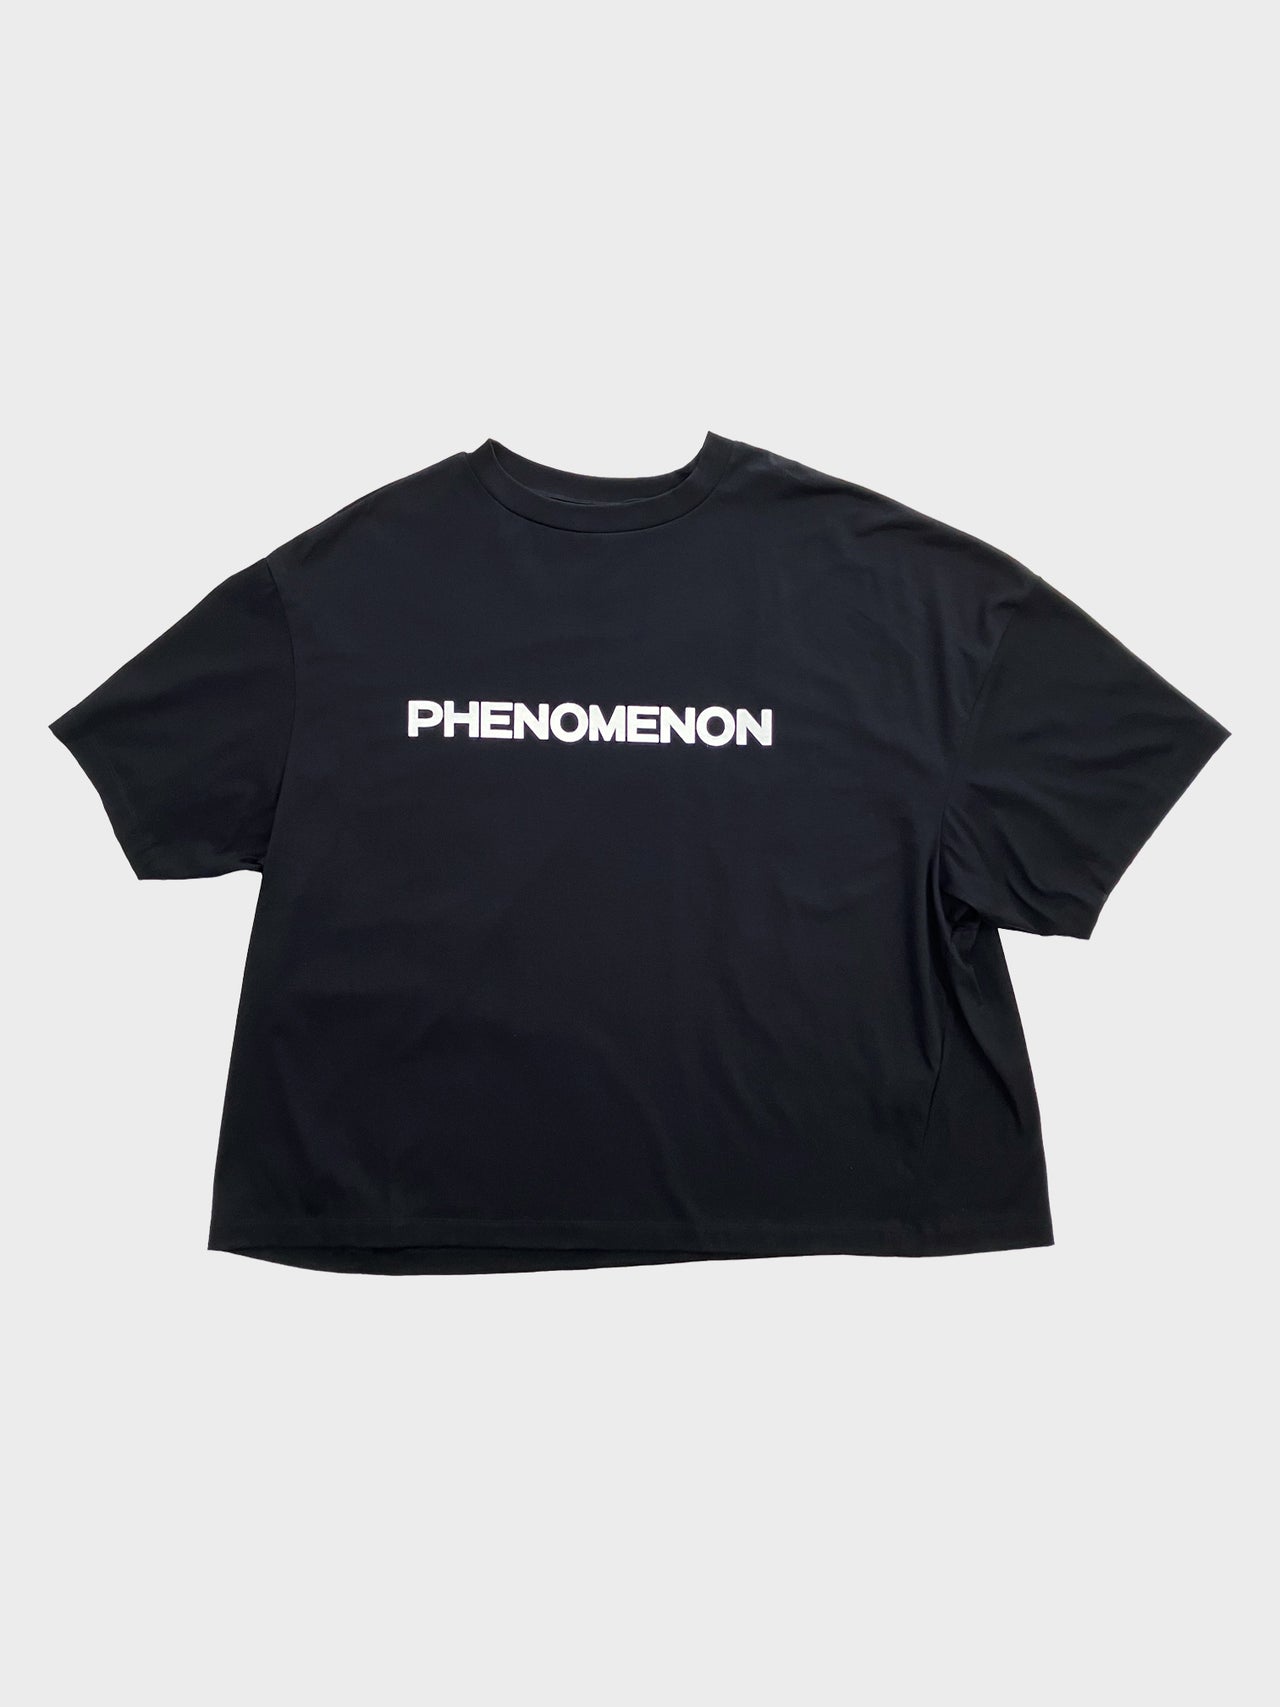 【30%OFF】PHENOMENON by FUMITO GANRYU / GRAFFITI T-SHIRT(BLACK)